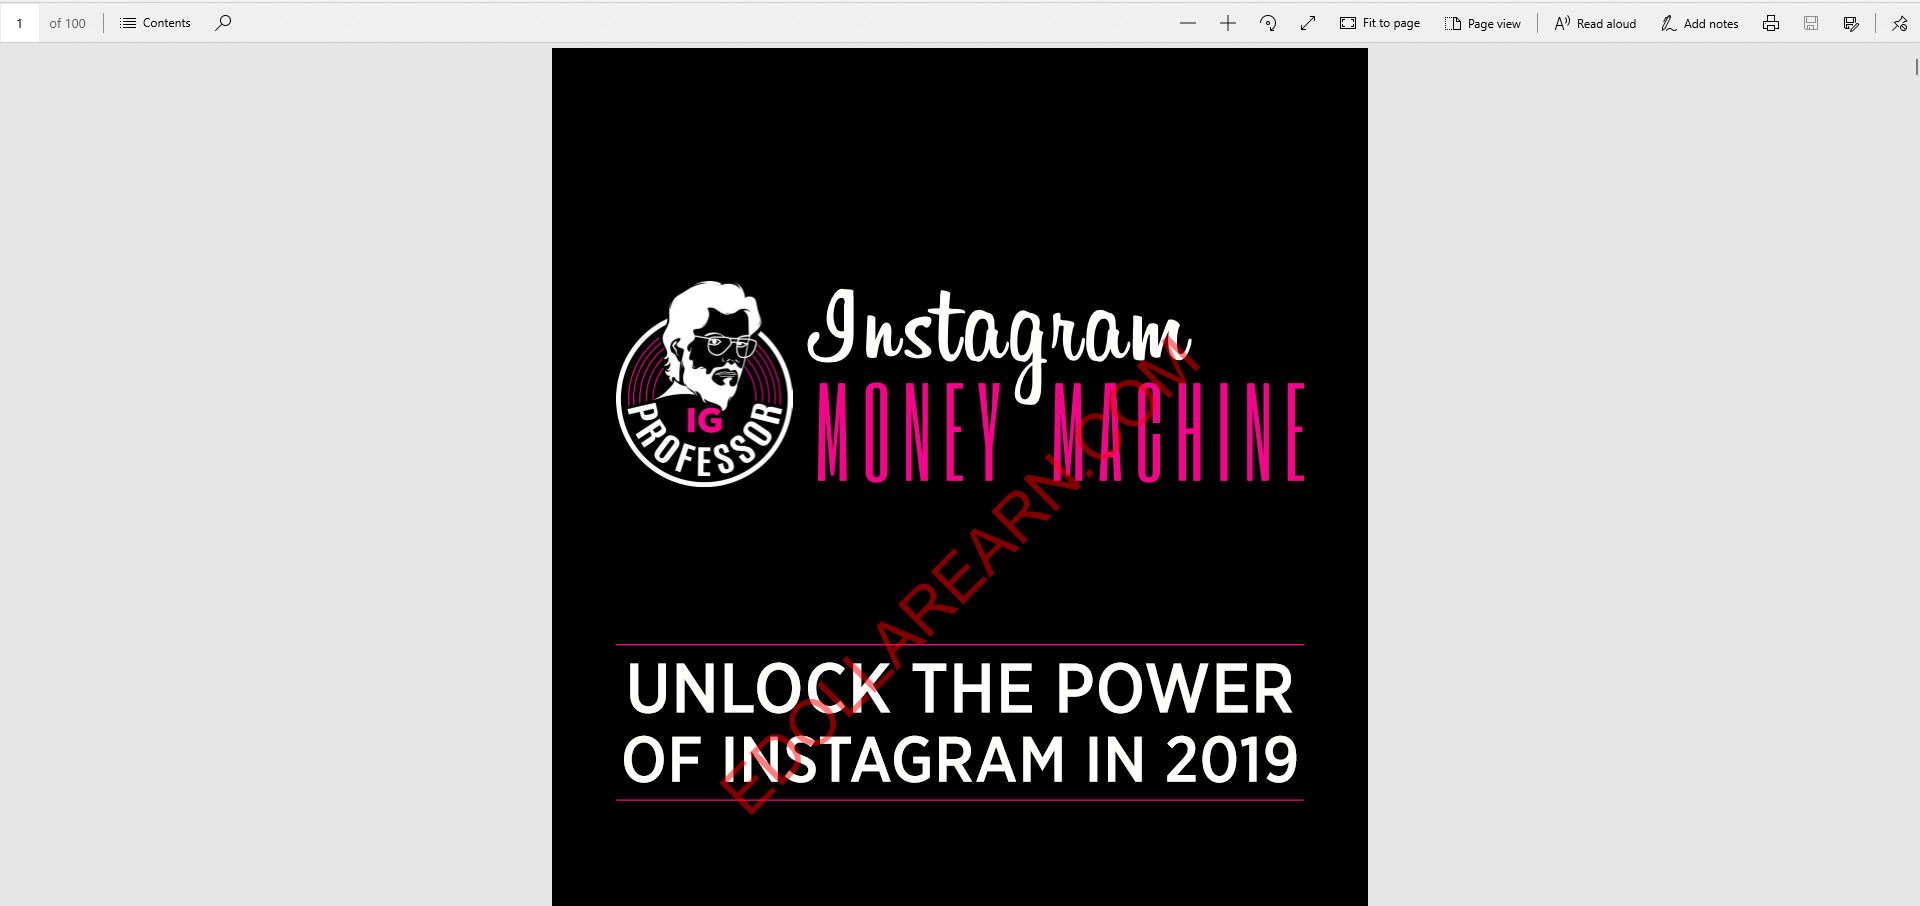 IG Professor - Instagram Money Machine v2.0 